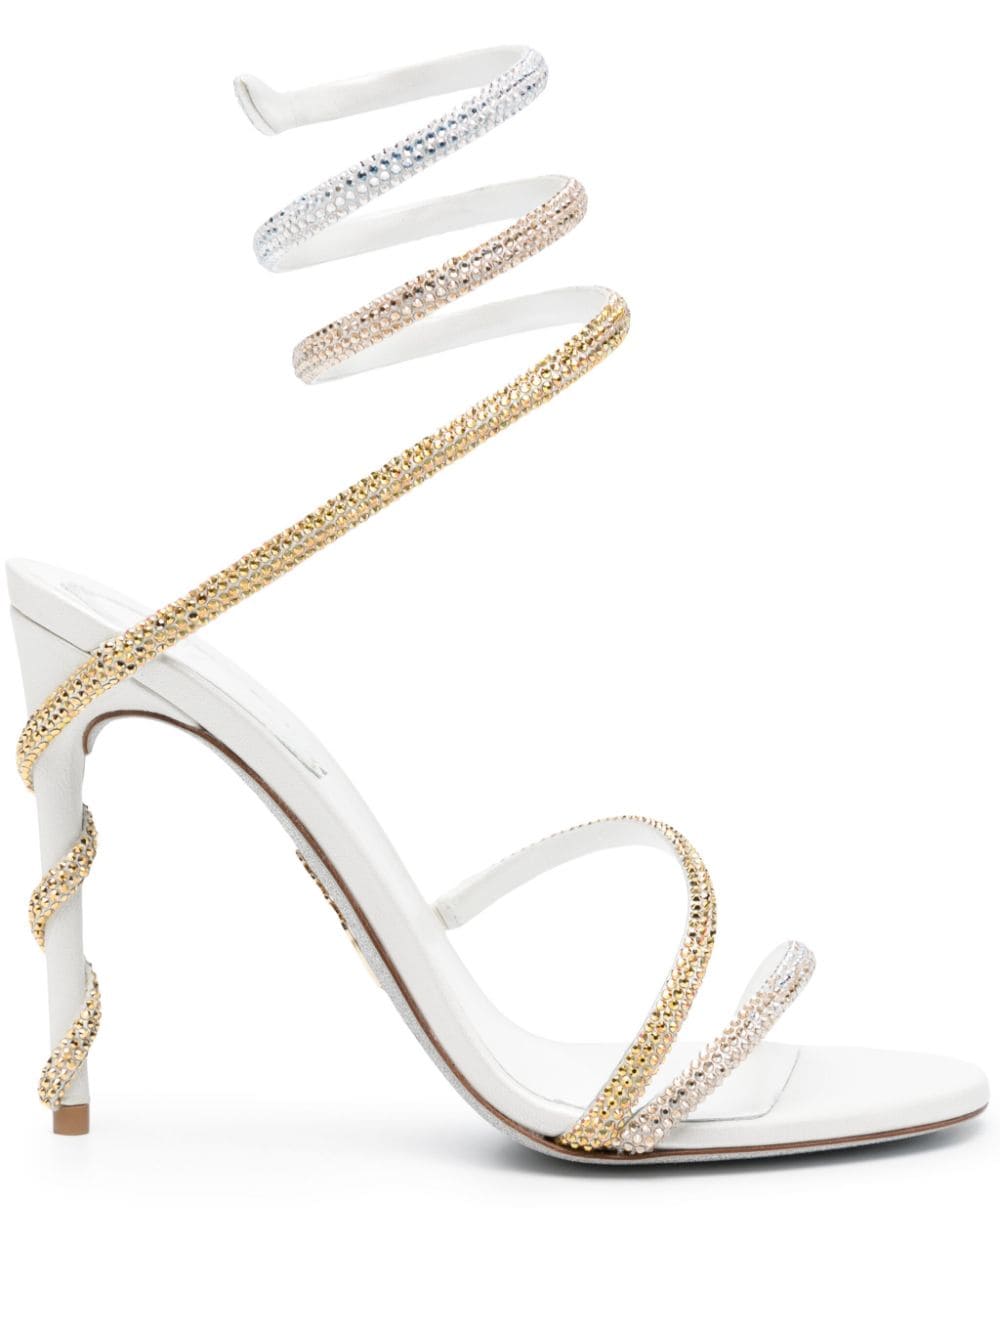 René Caovilla 115mm Margot sandals - Gold von René Caovilla